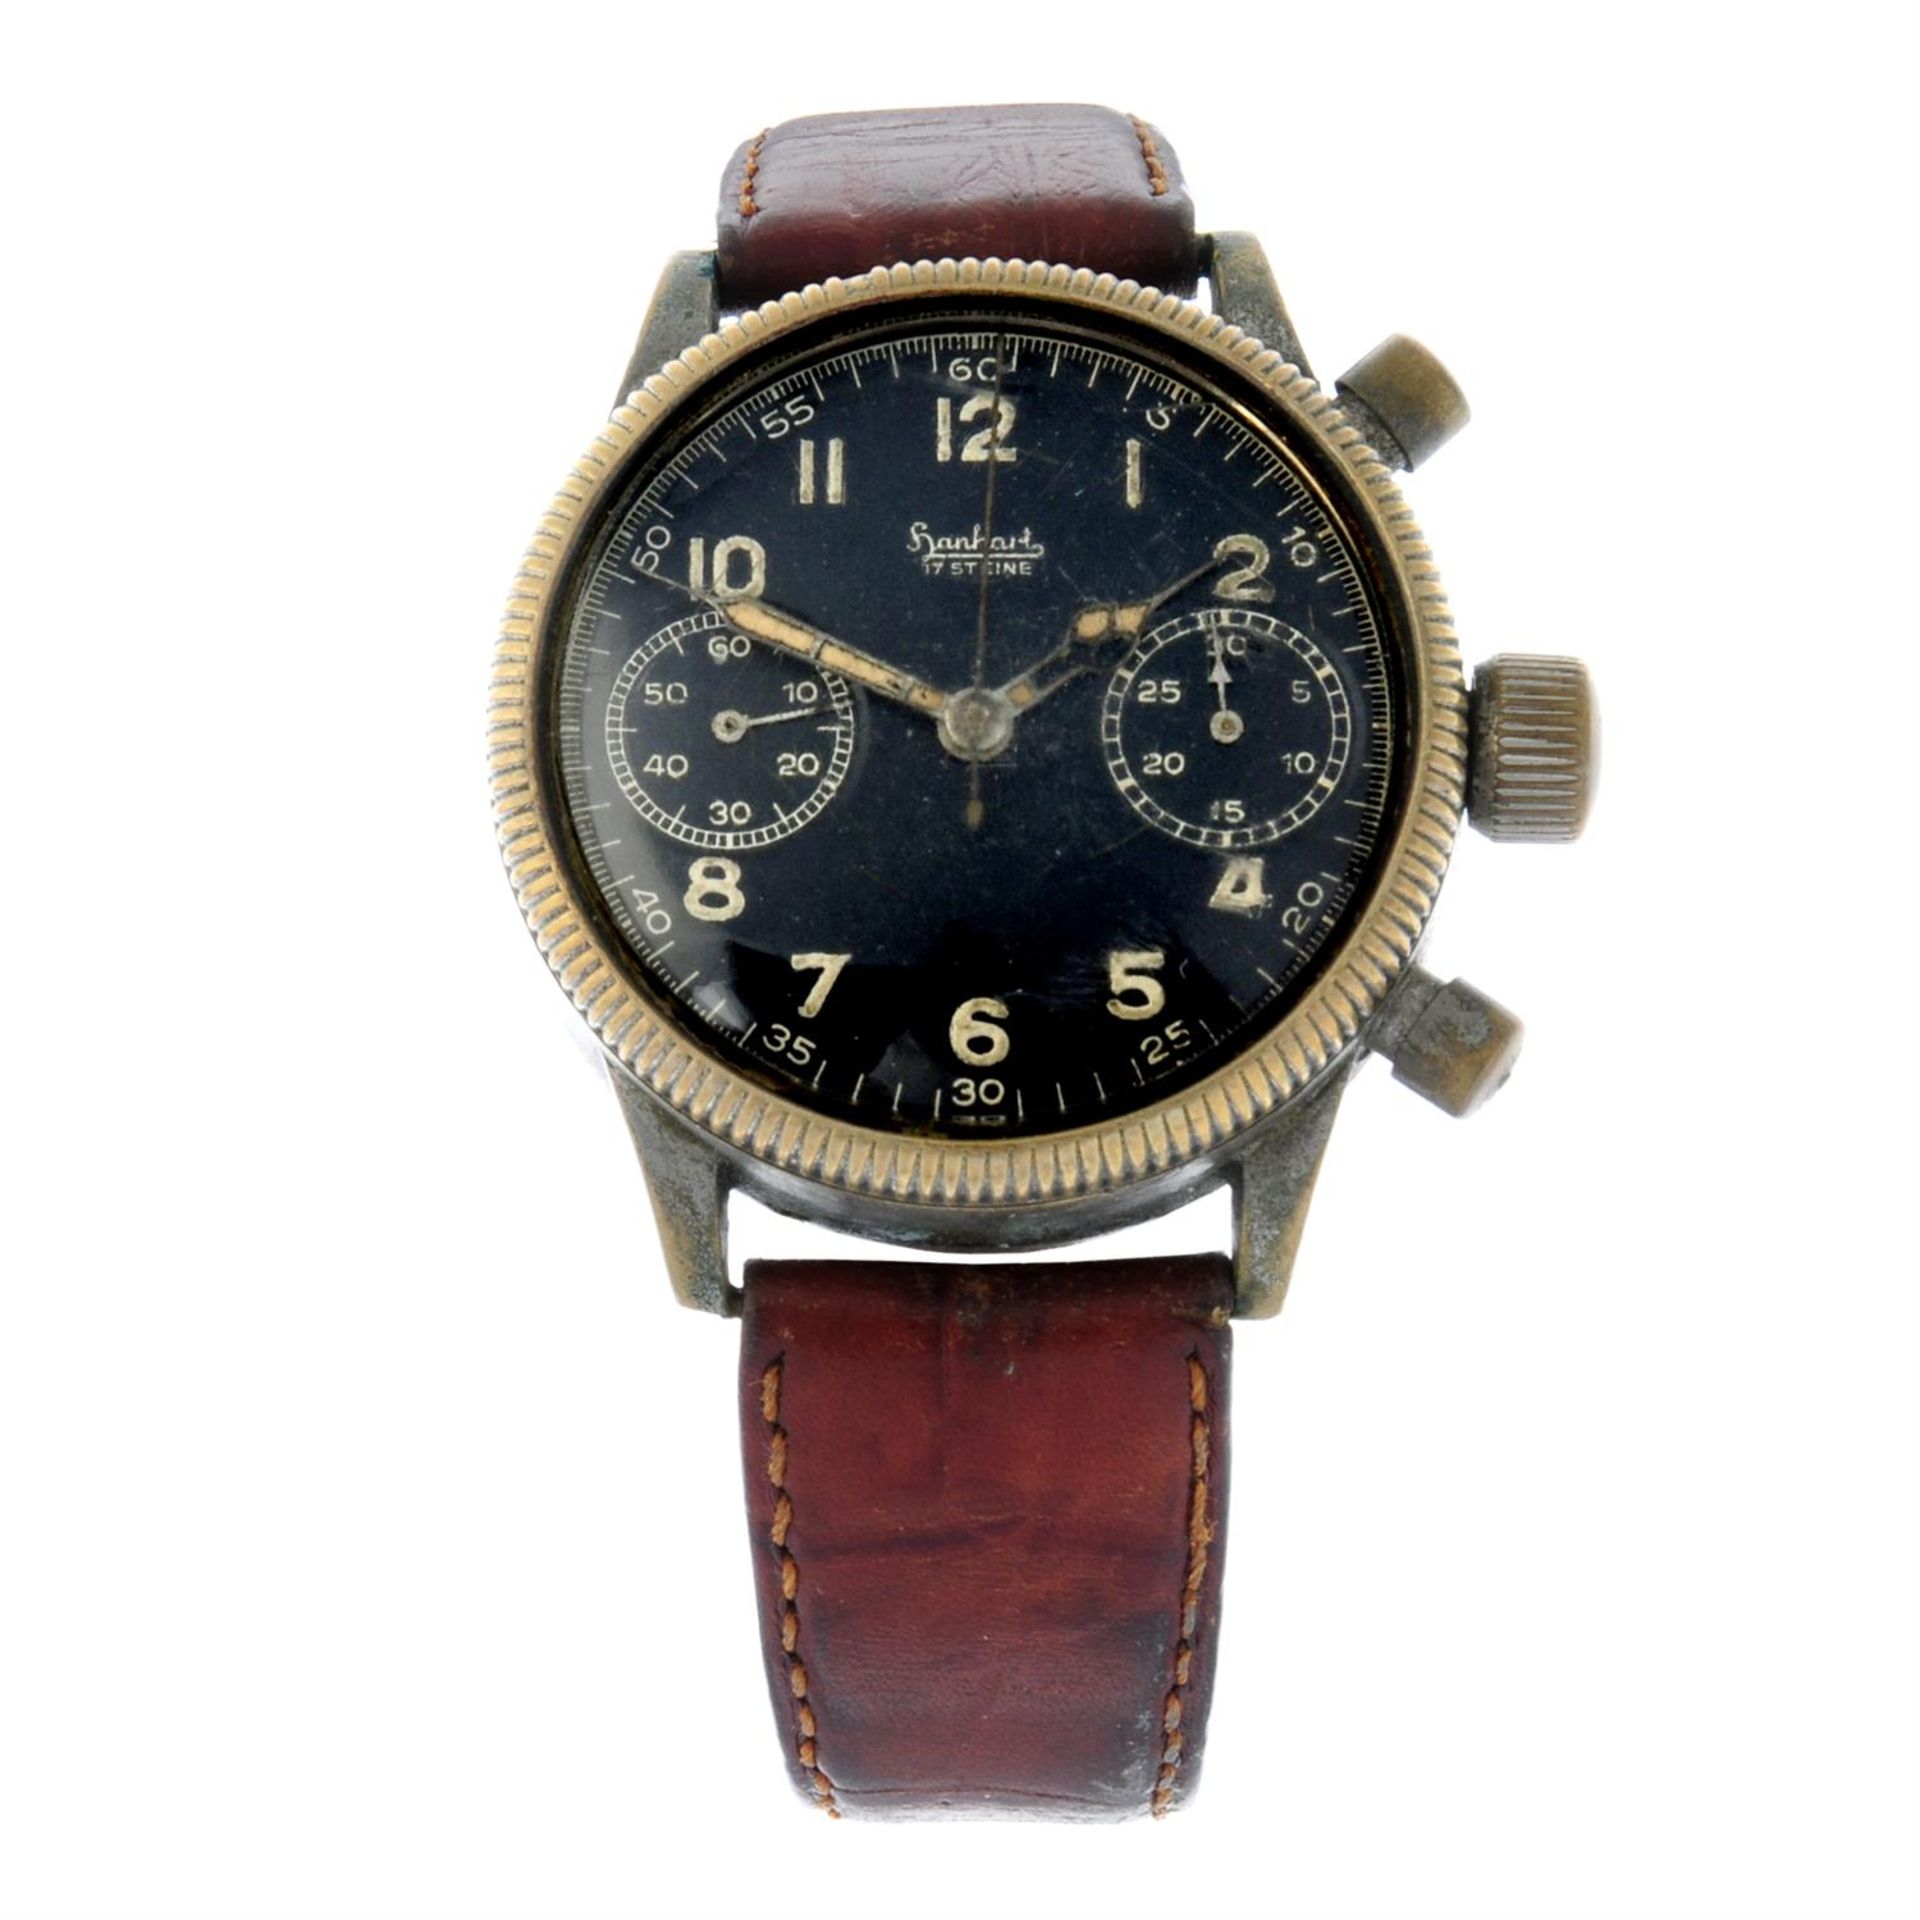 HANHART - a nickel plated chronograph wrist watch, 39mm.